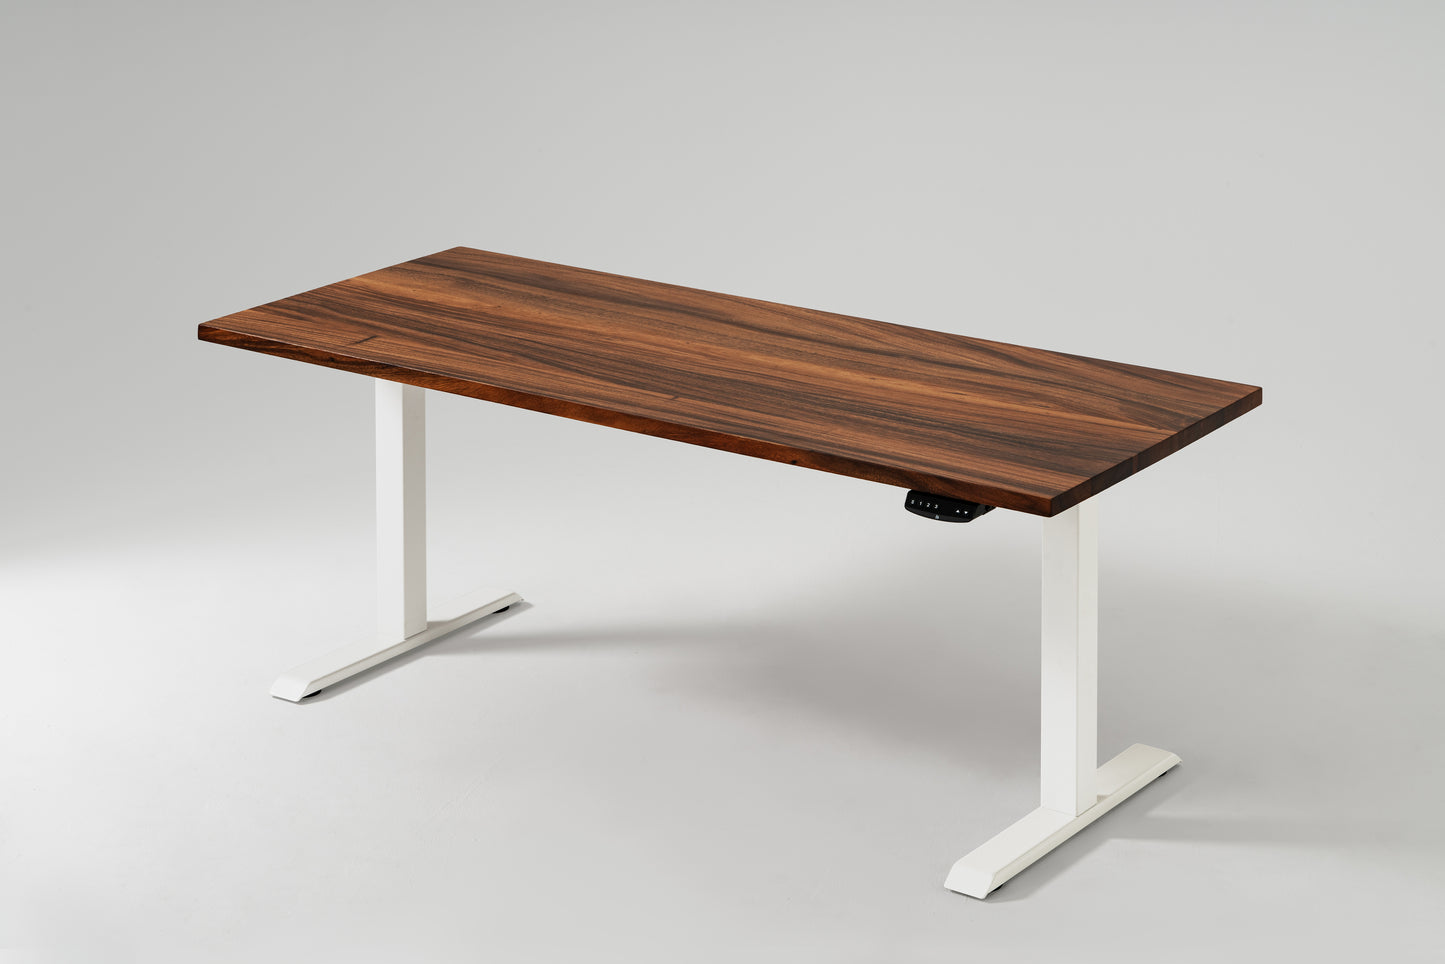 Elephant Desks - Height Adjustable Standing Desk - Abundance Series (Solid Wood and Flat Edges)